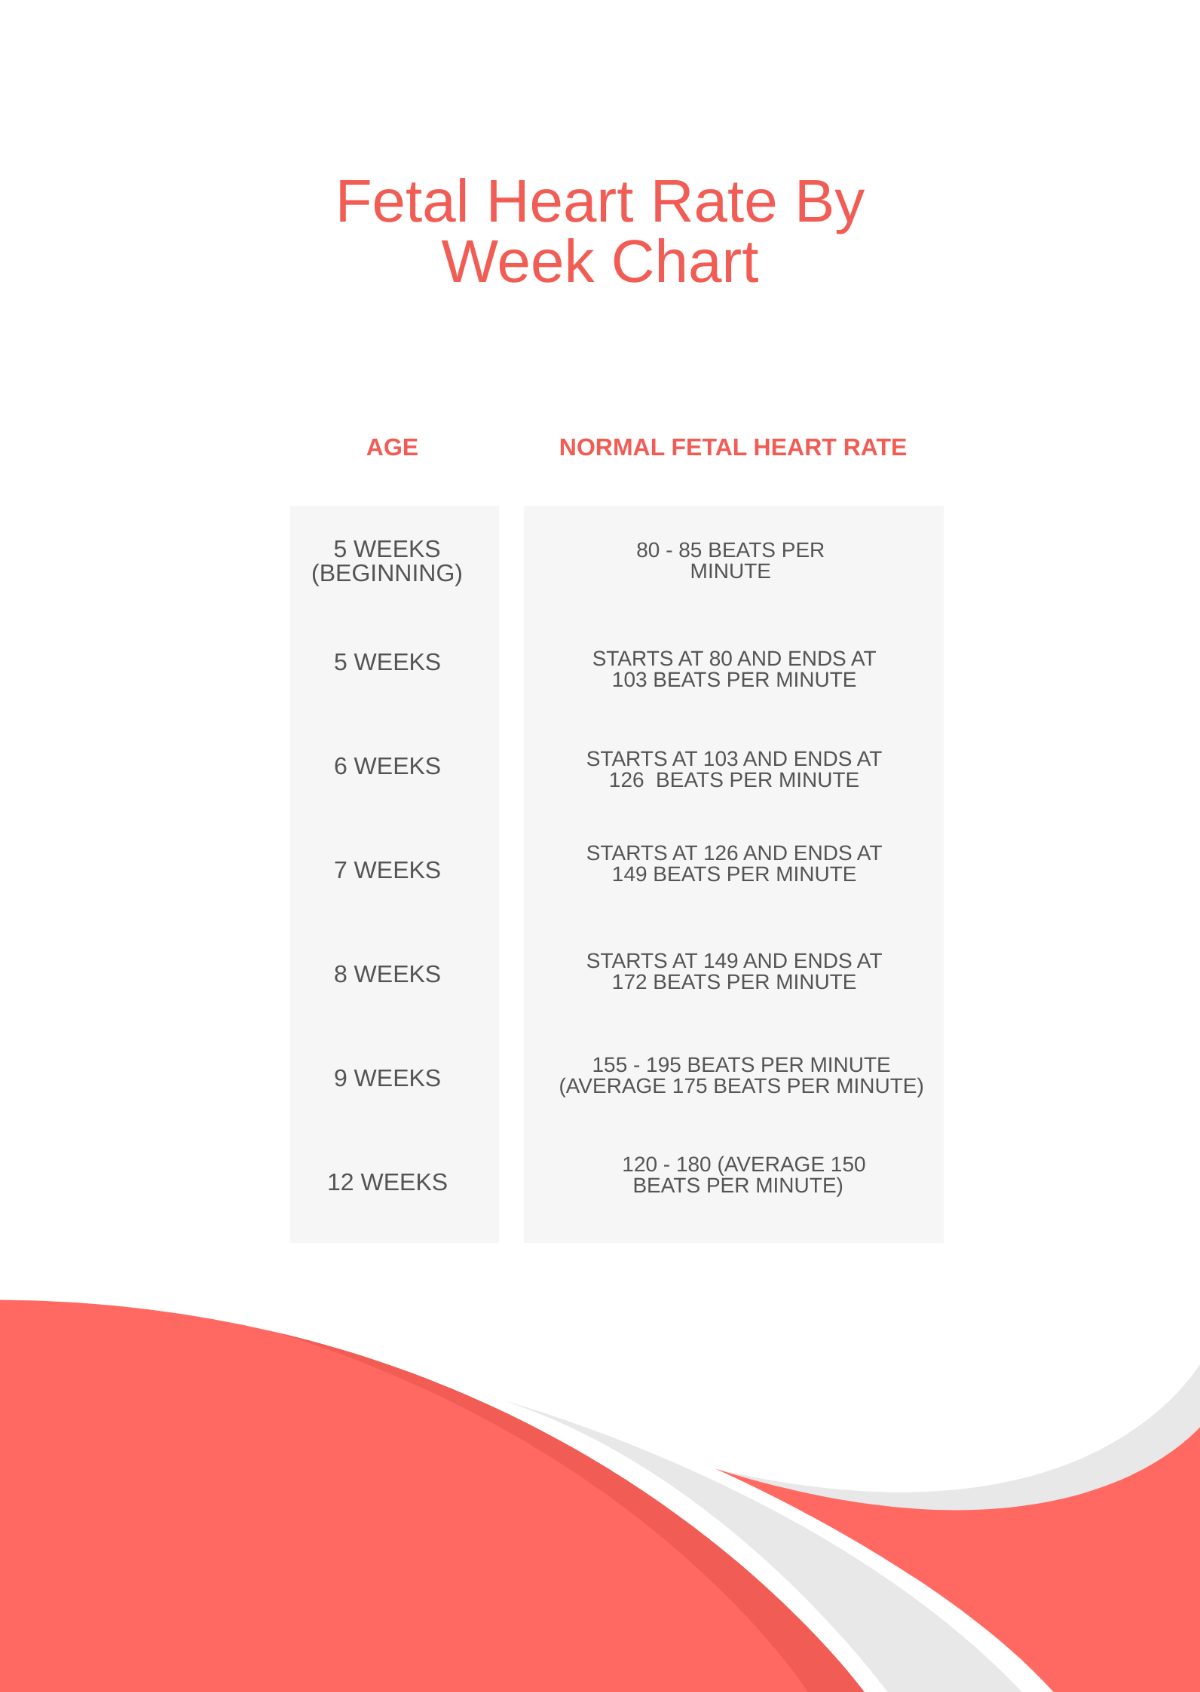 Free Fetal Heart Rate By Week Chart Template